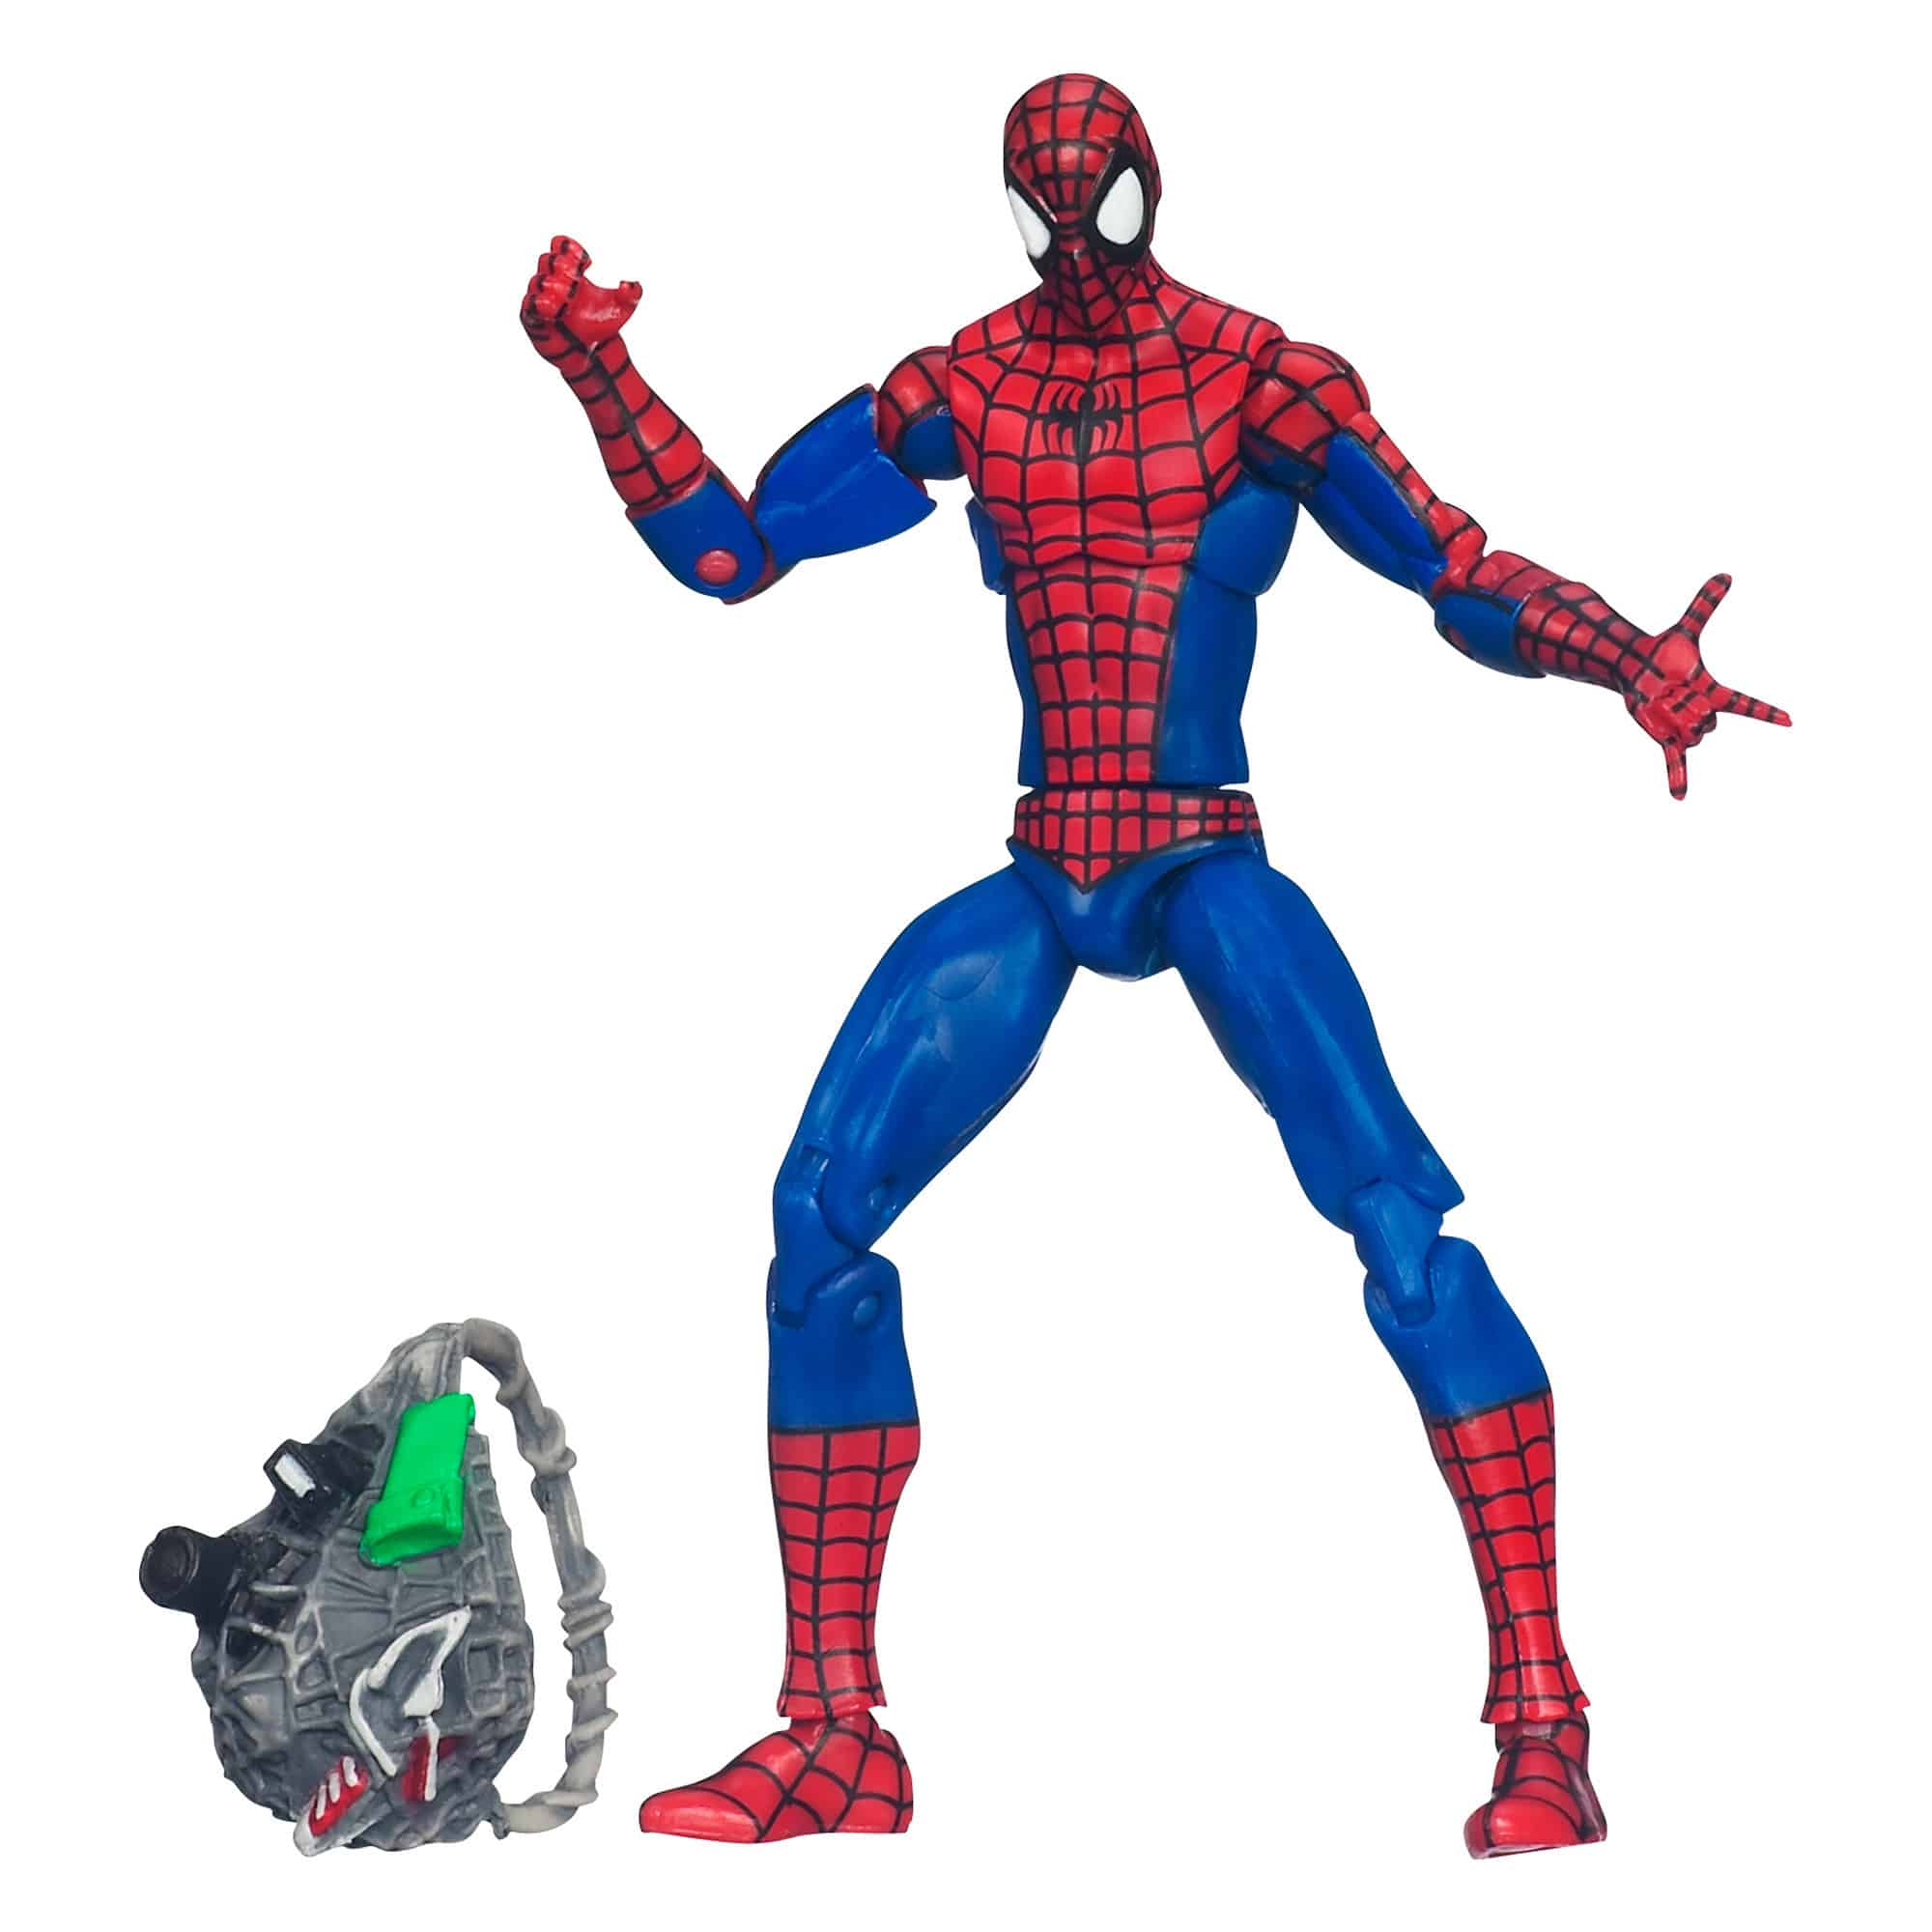 Marvel Universe - Series 4 Figure - Spider-Man